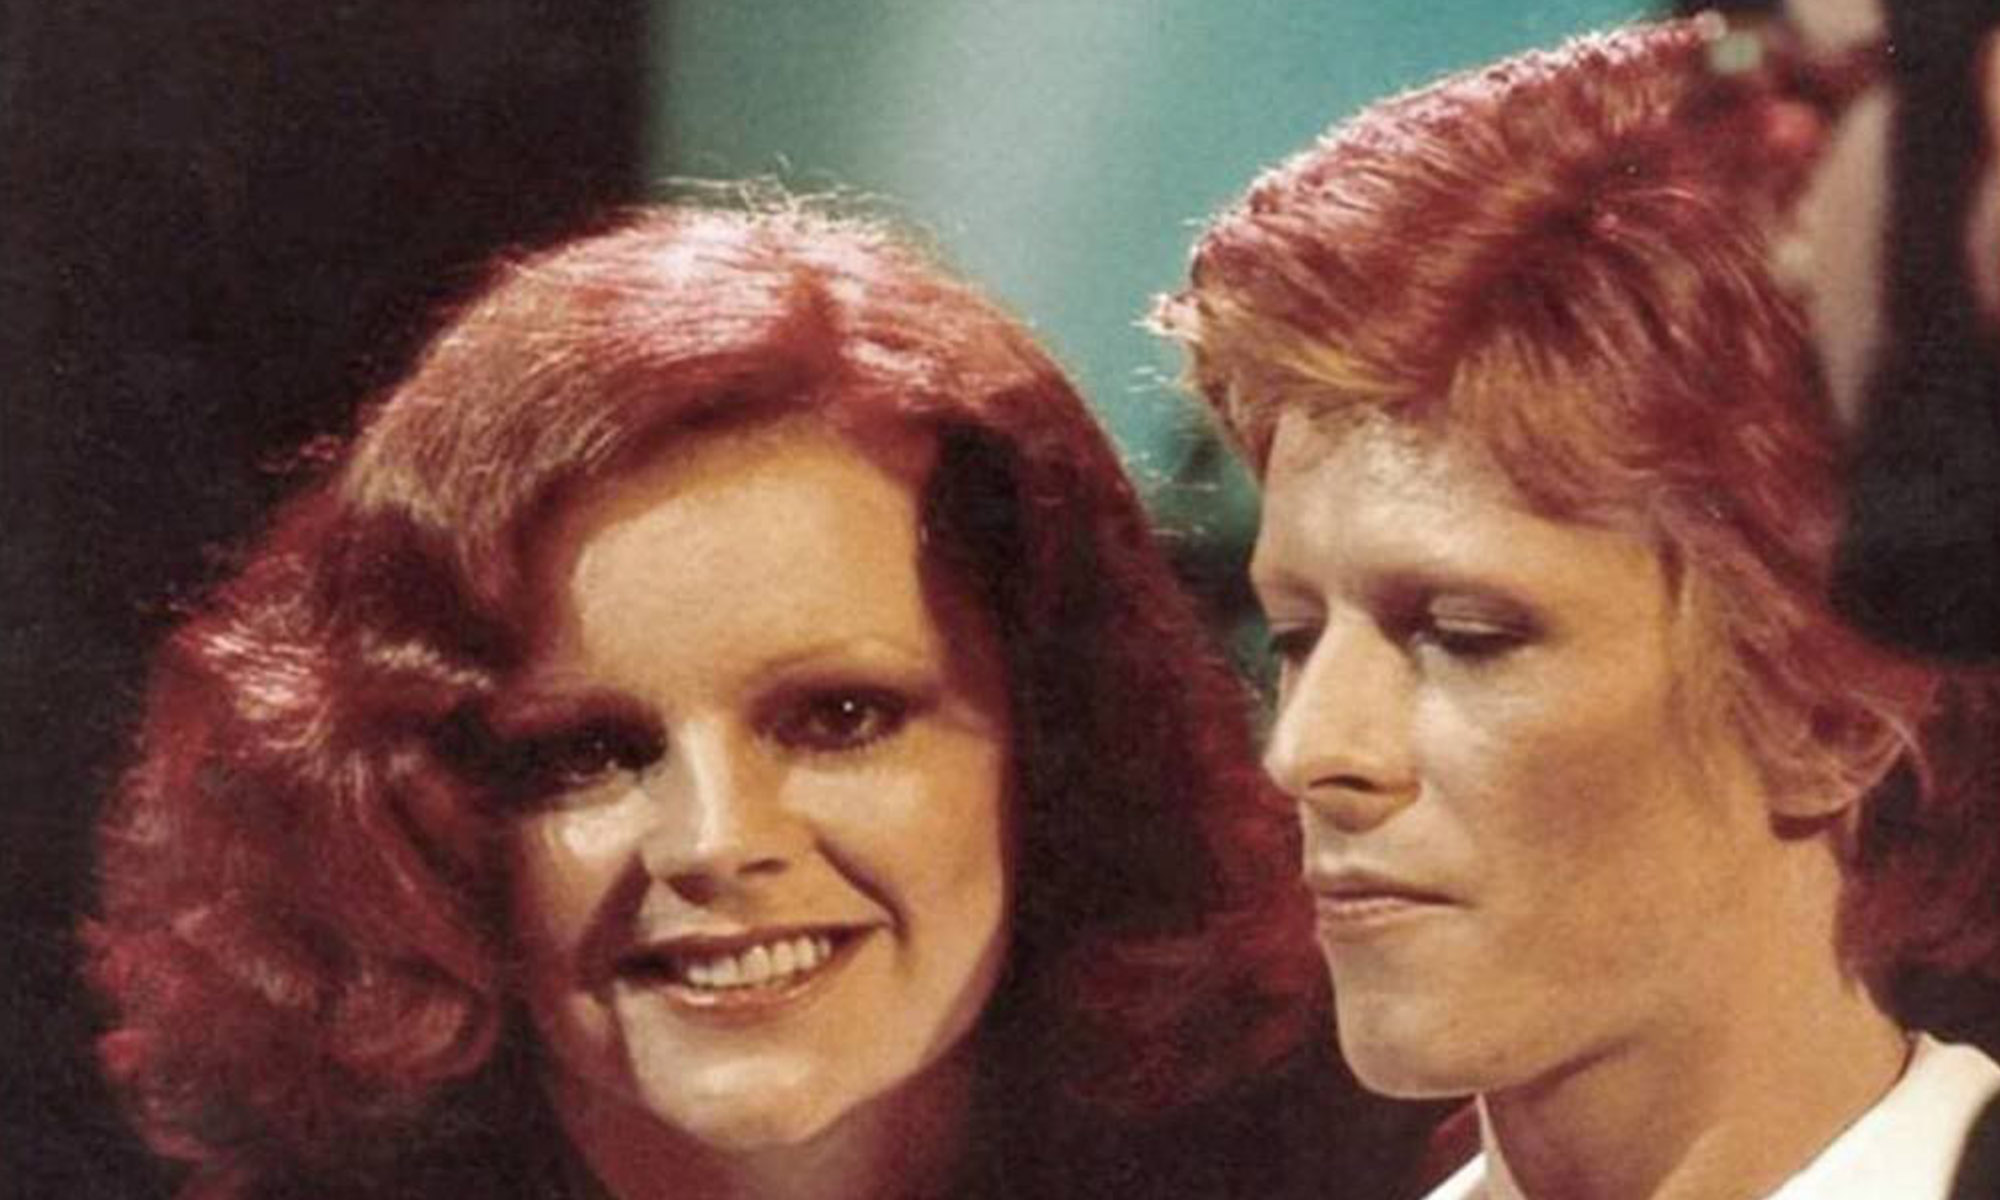 Cherry Vanilla and David Bowie